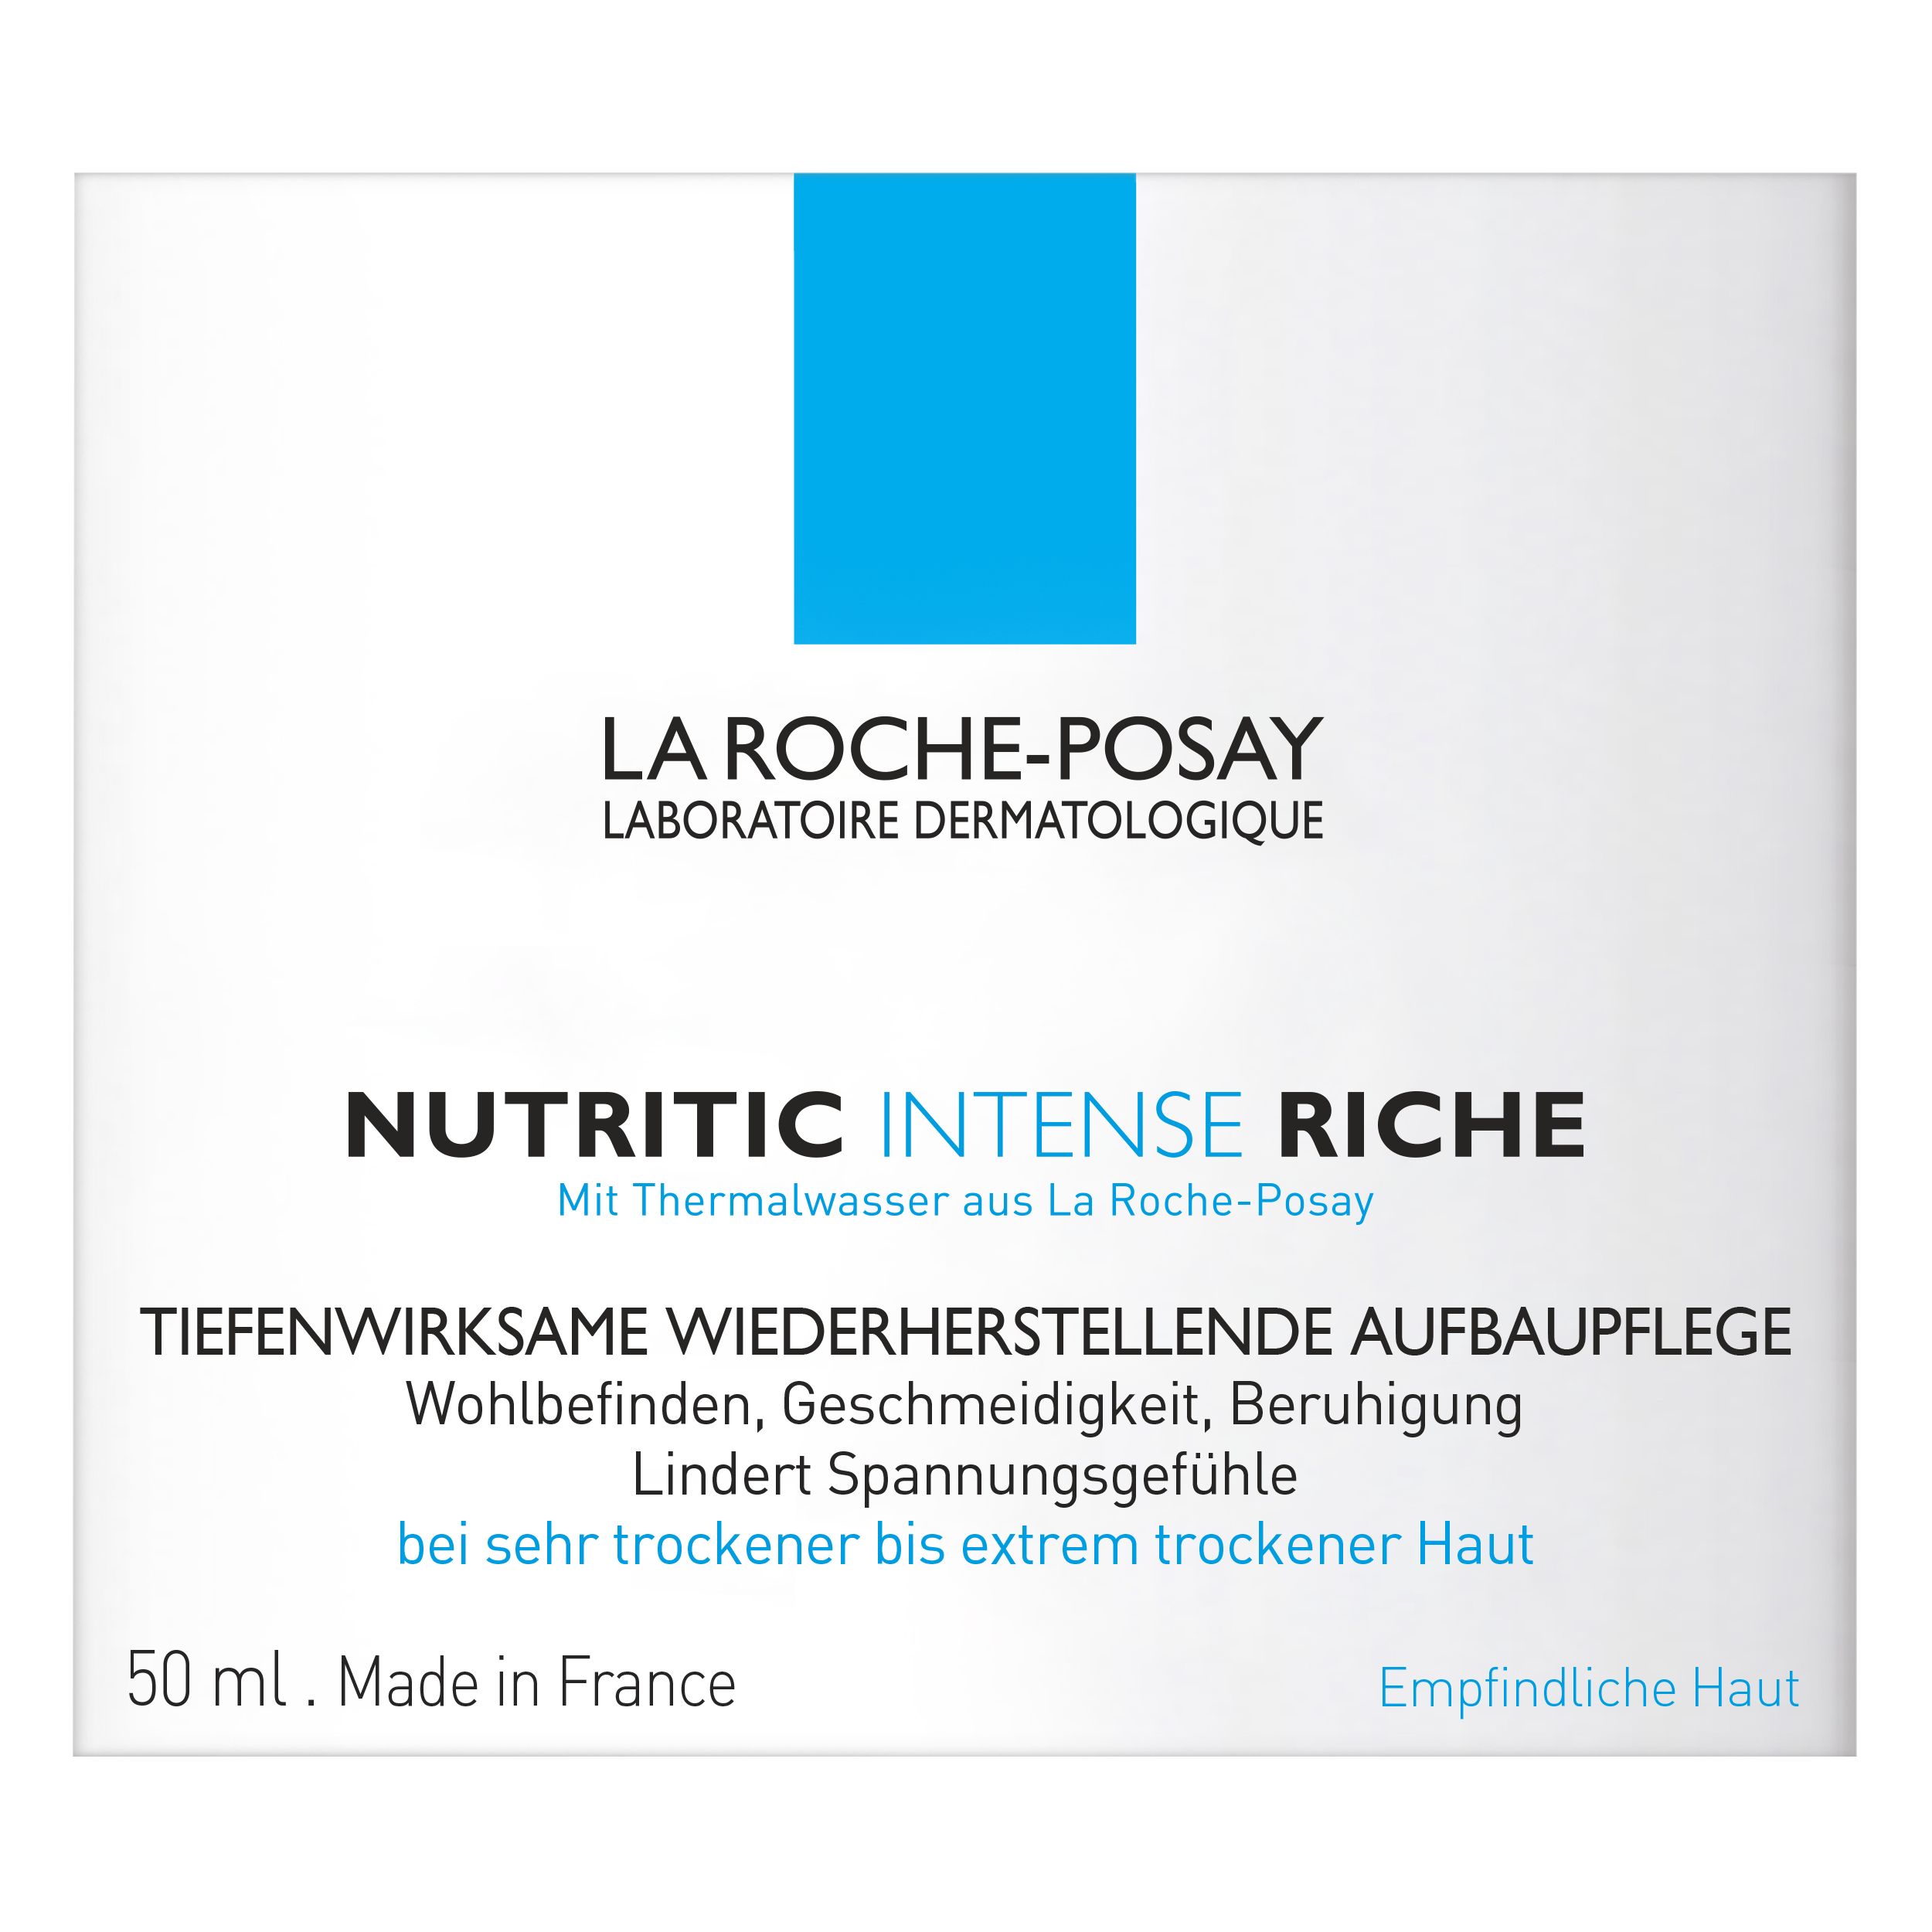 La Roche-Posay nutritic, image 2 sur 4